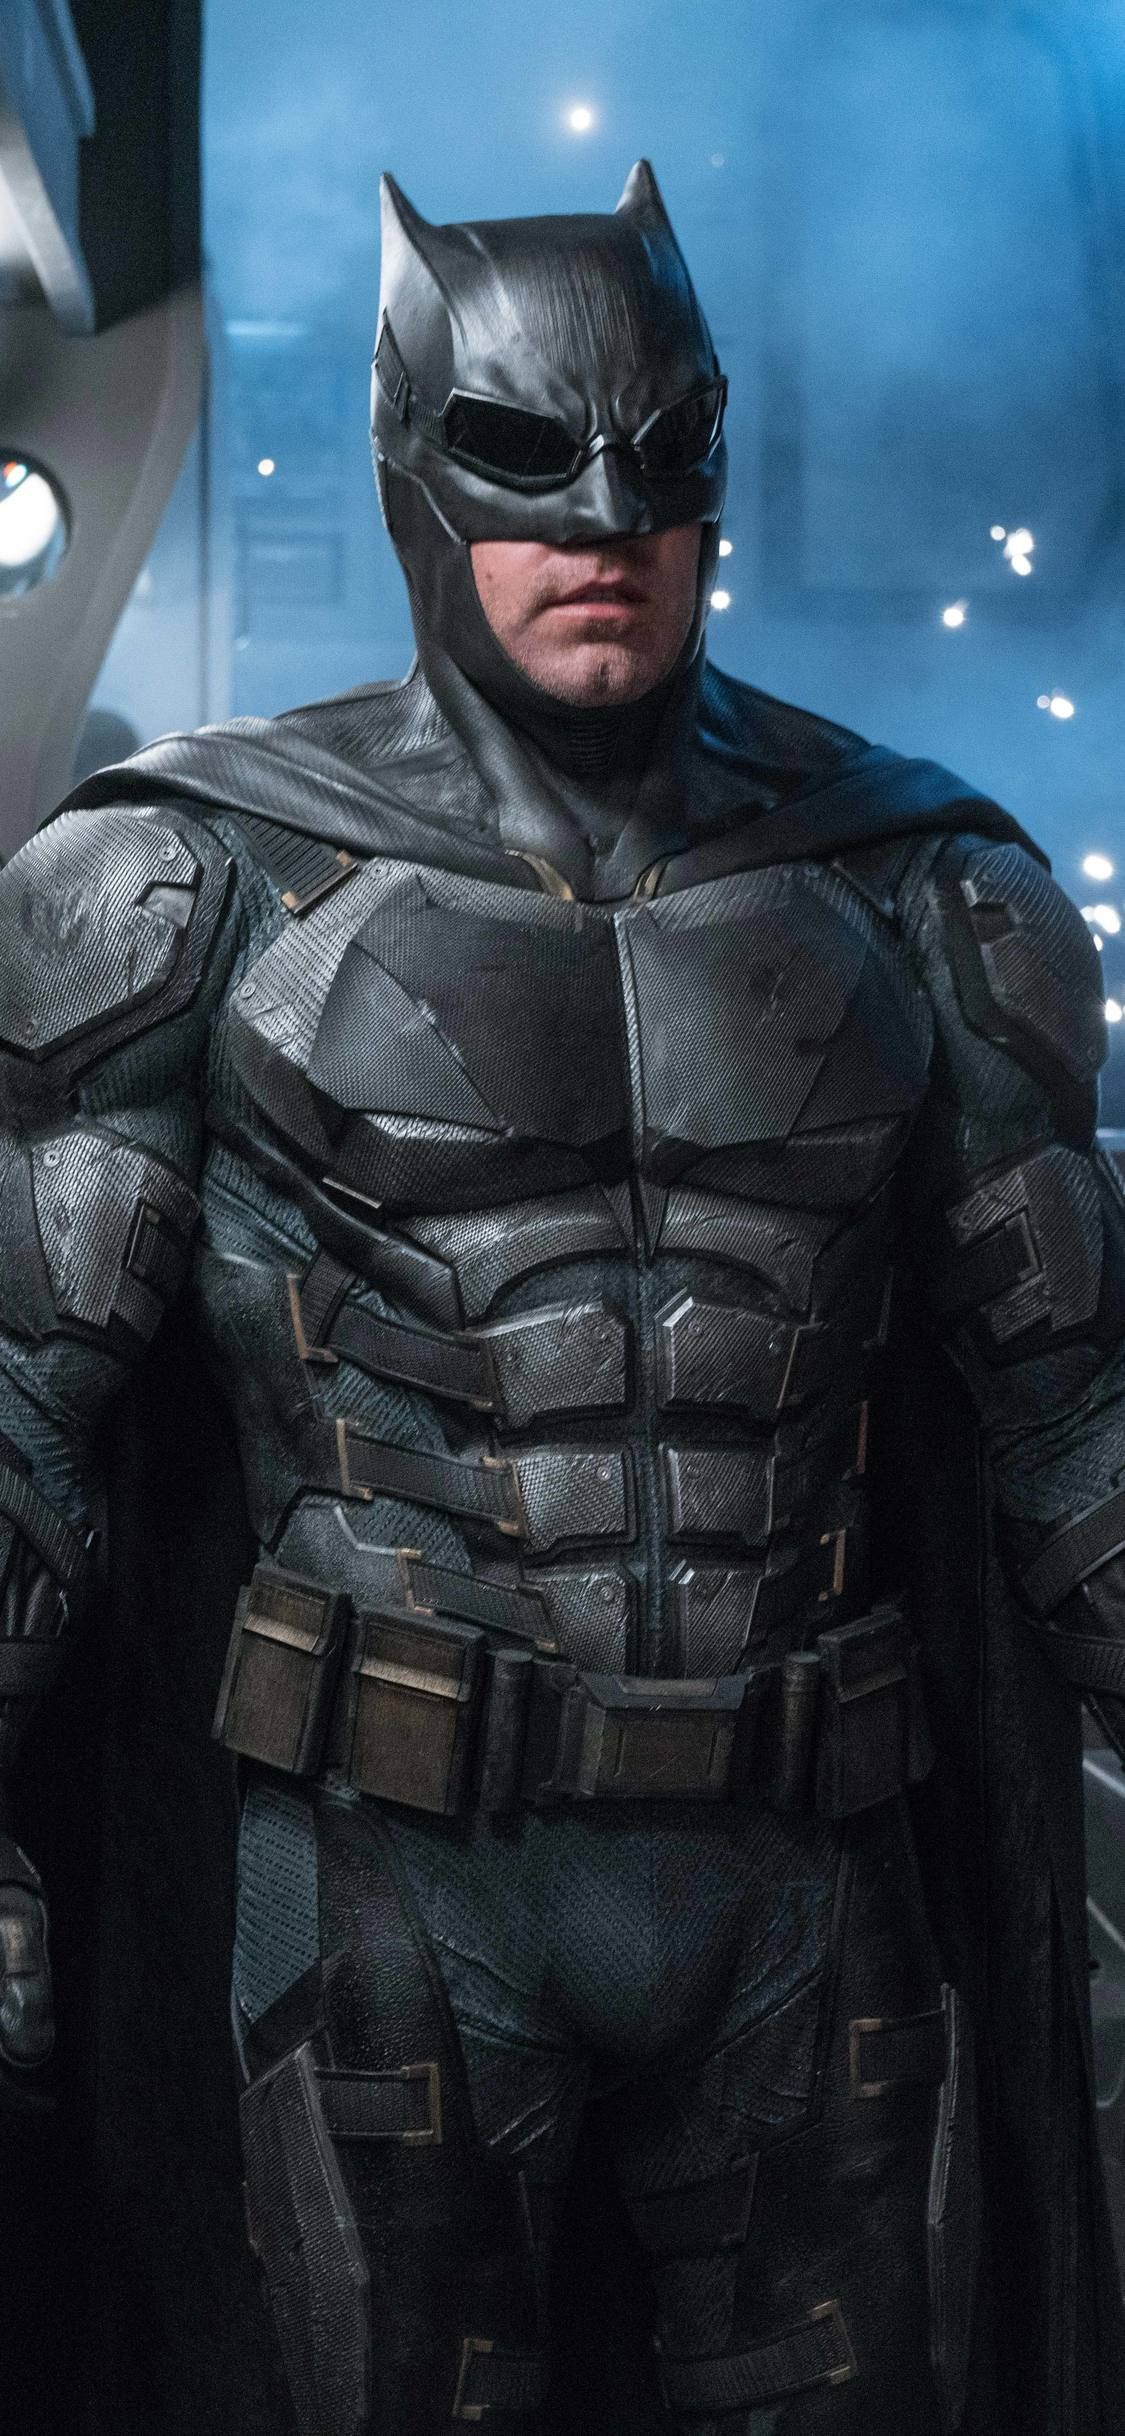 Ben Affleck As Batman In Justice League 8k iPhone XS, iPhone iPhone X HD 4k Wallpaper, I. Affleck batman, Ben affleck batman, Ben affleck batman suit